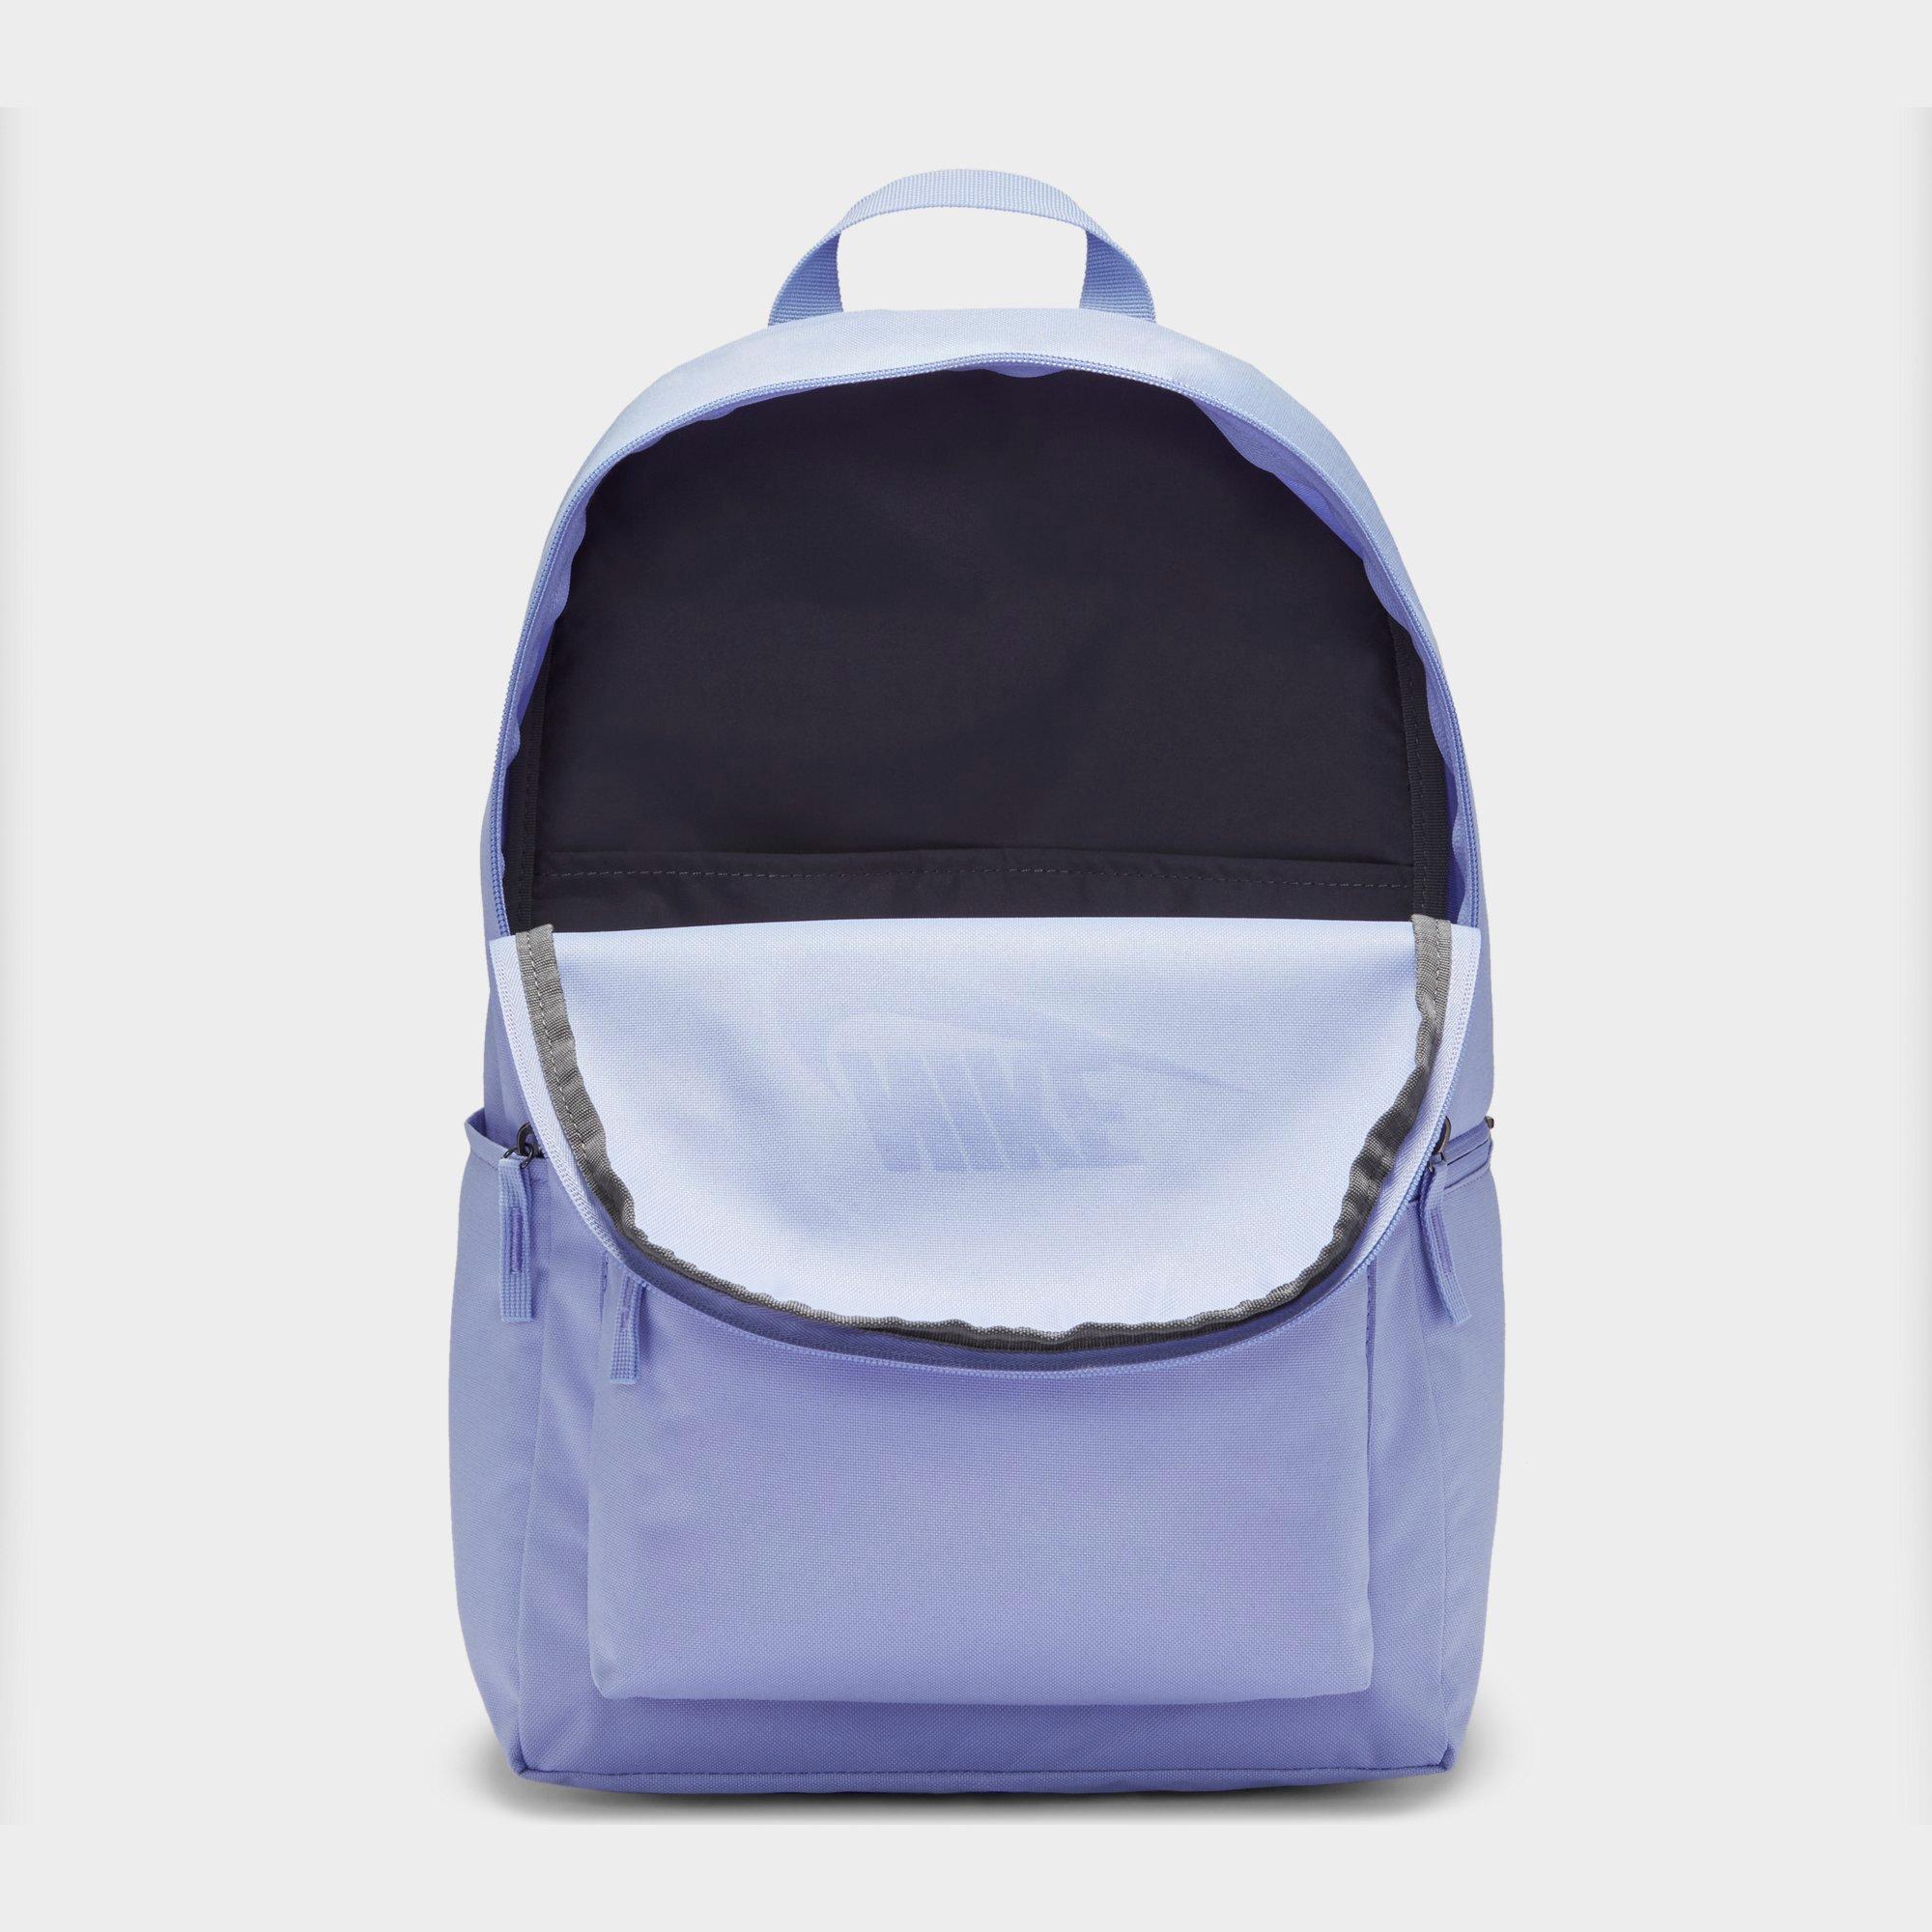 light purple nike backpack